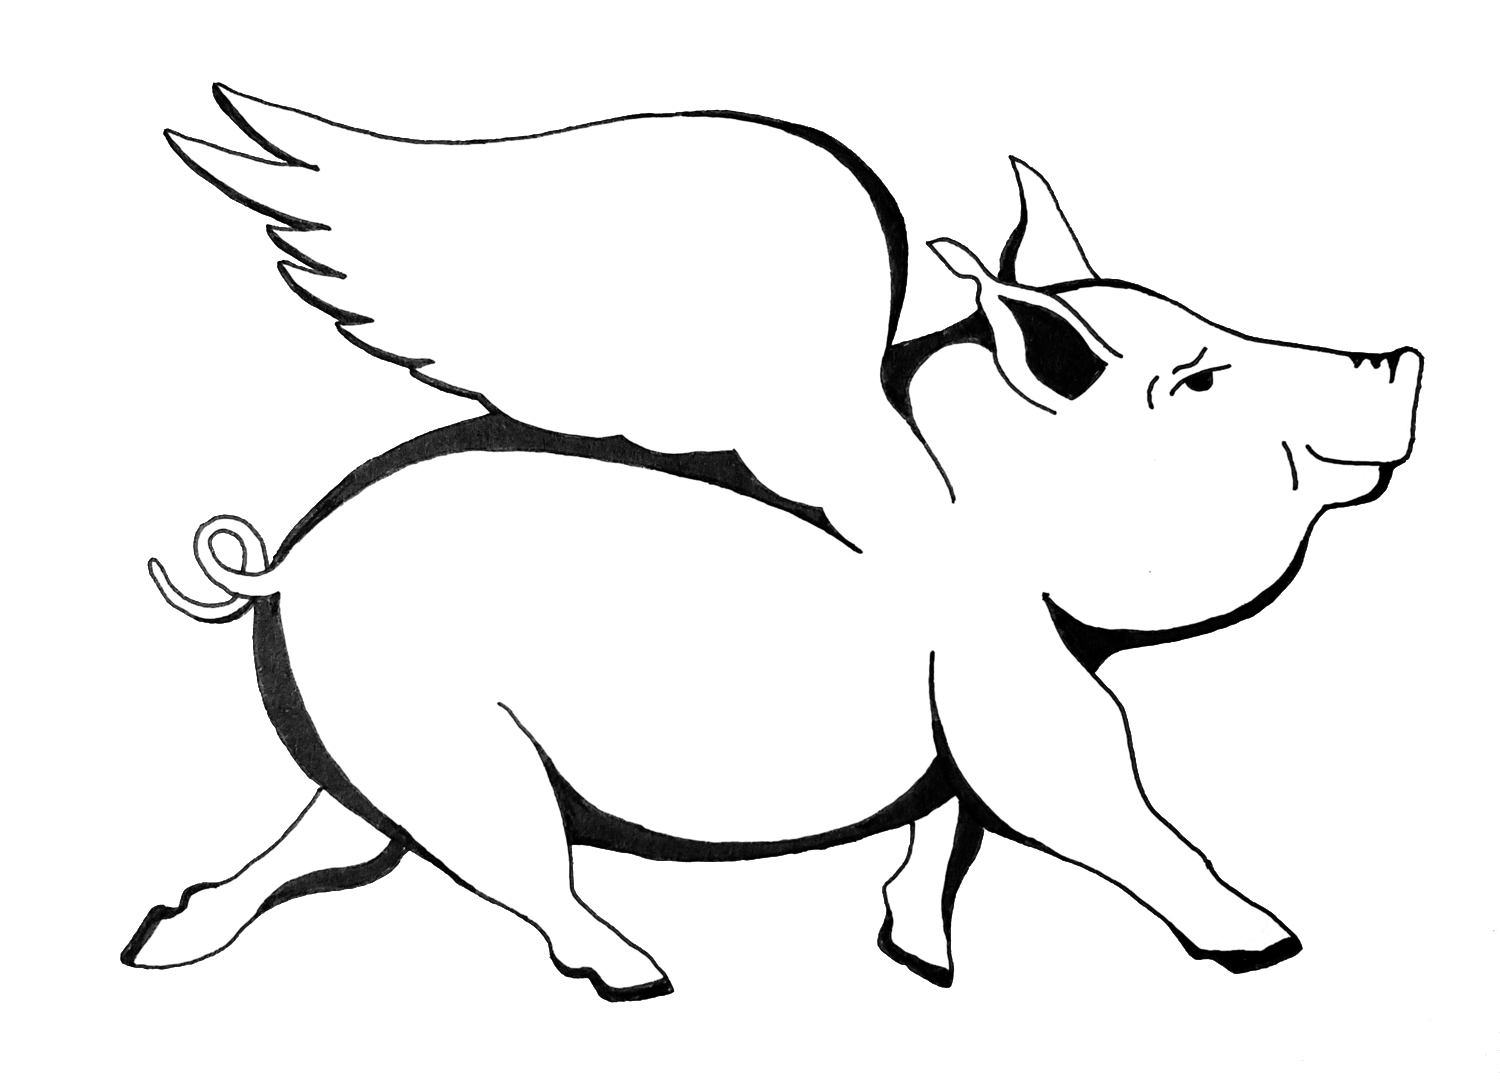 Flying Pig Sketch at Explore